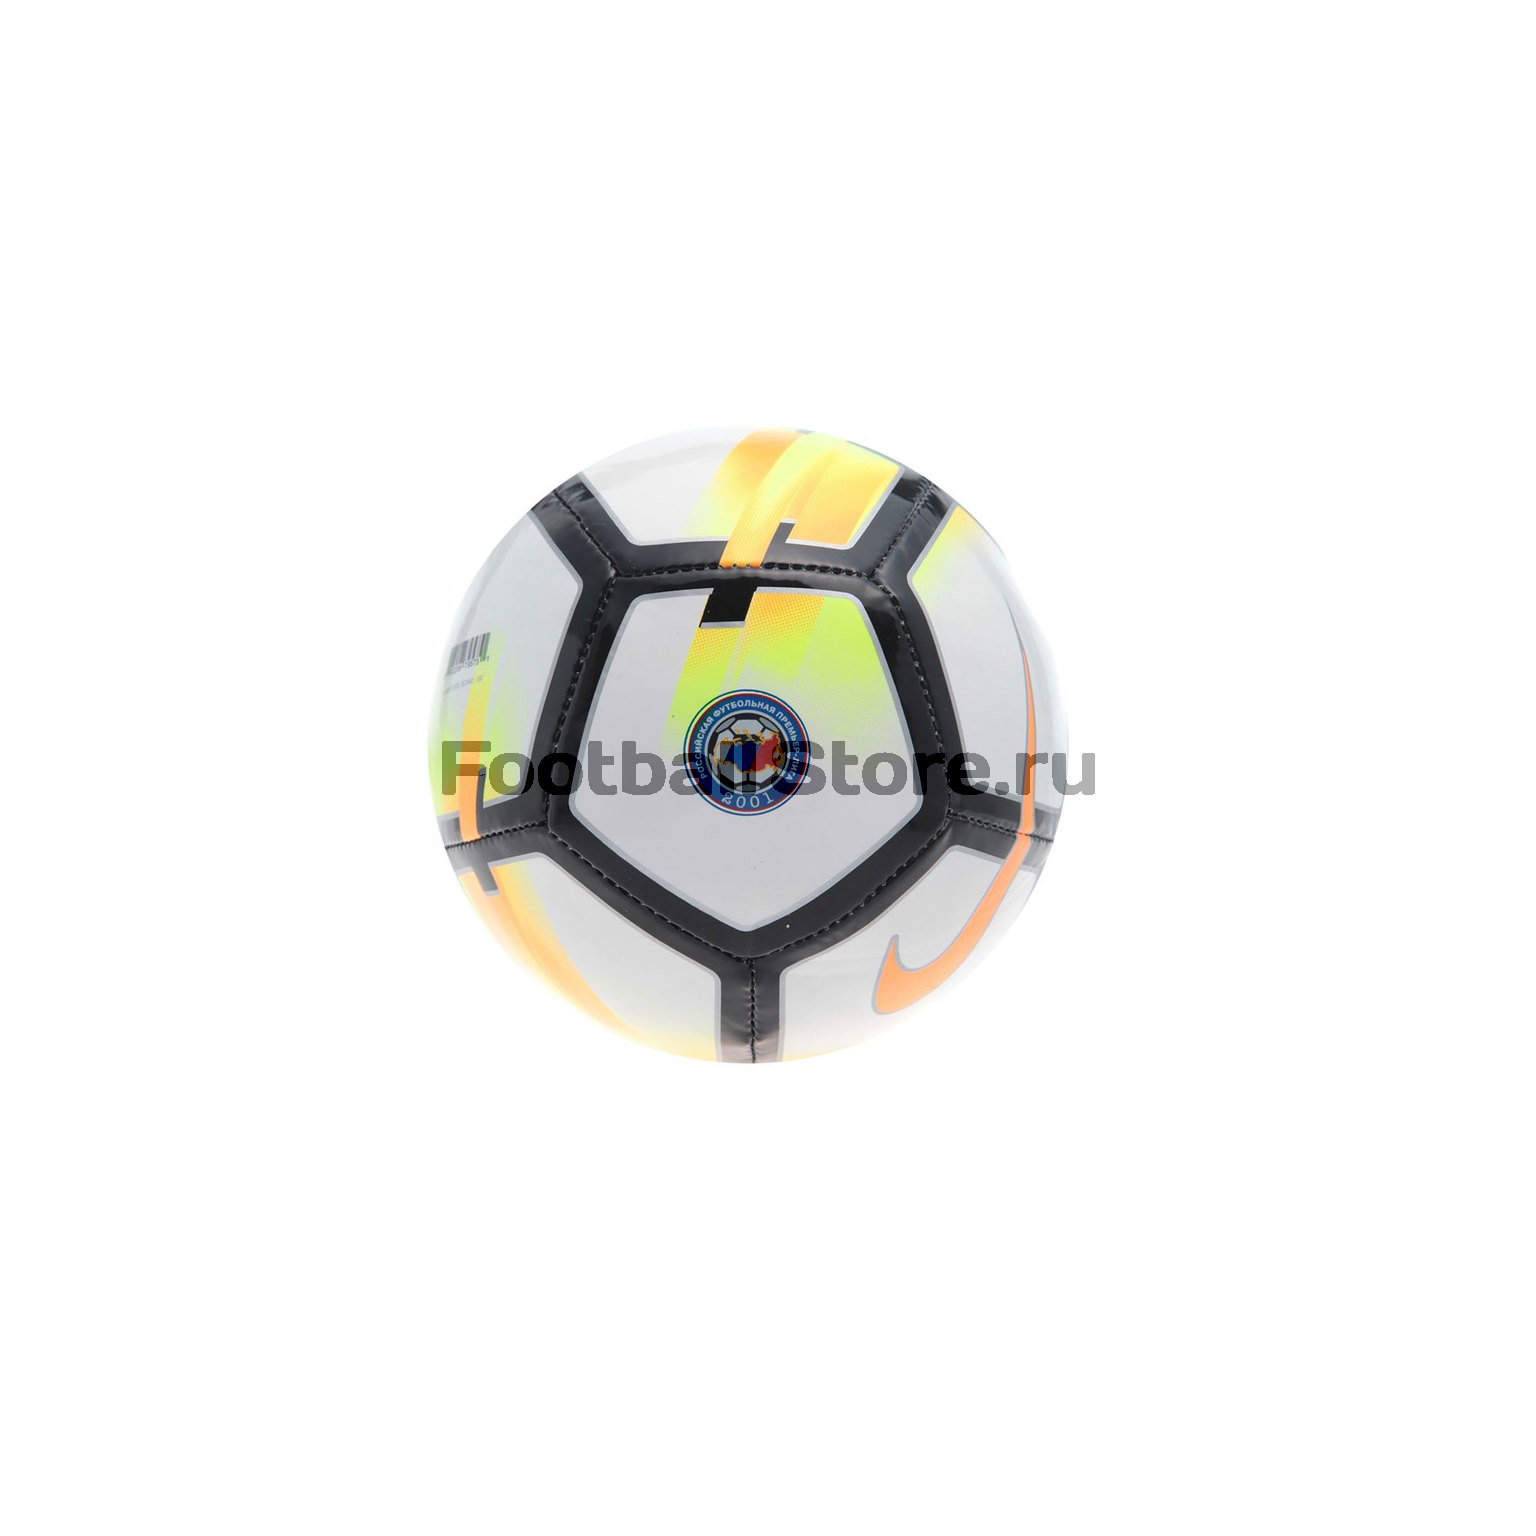 Мяч сувенирный Nike RPL Skls SC3491-100